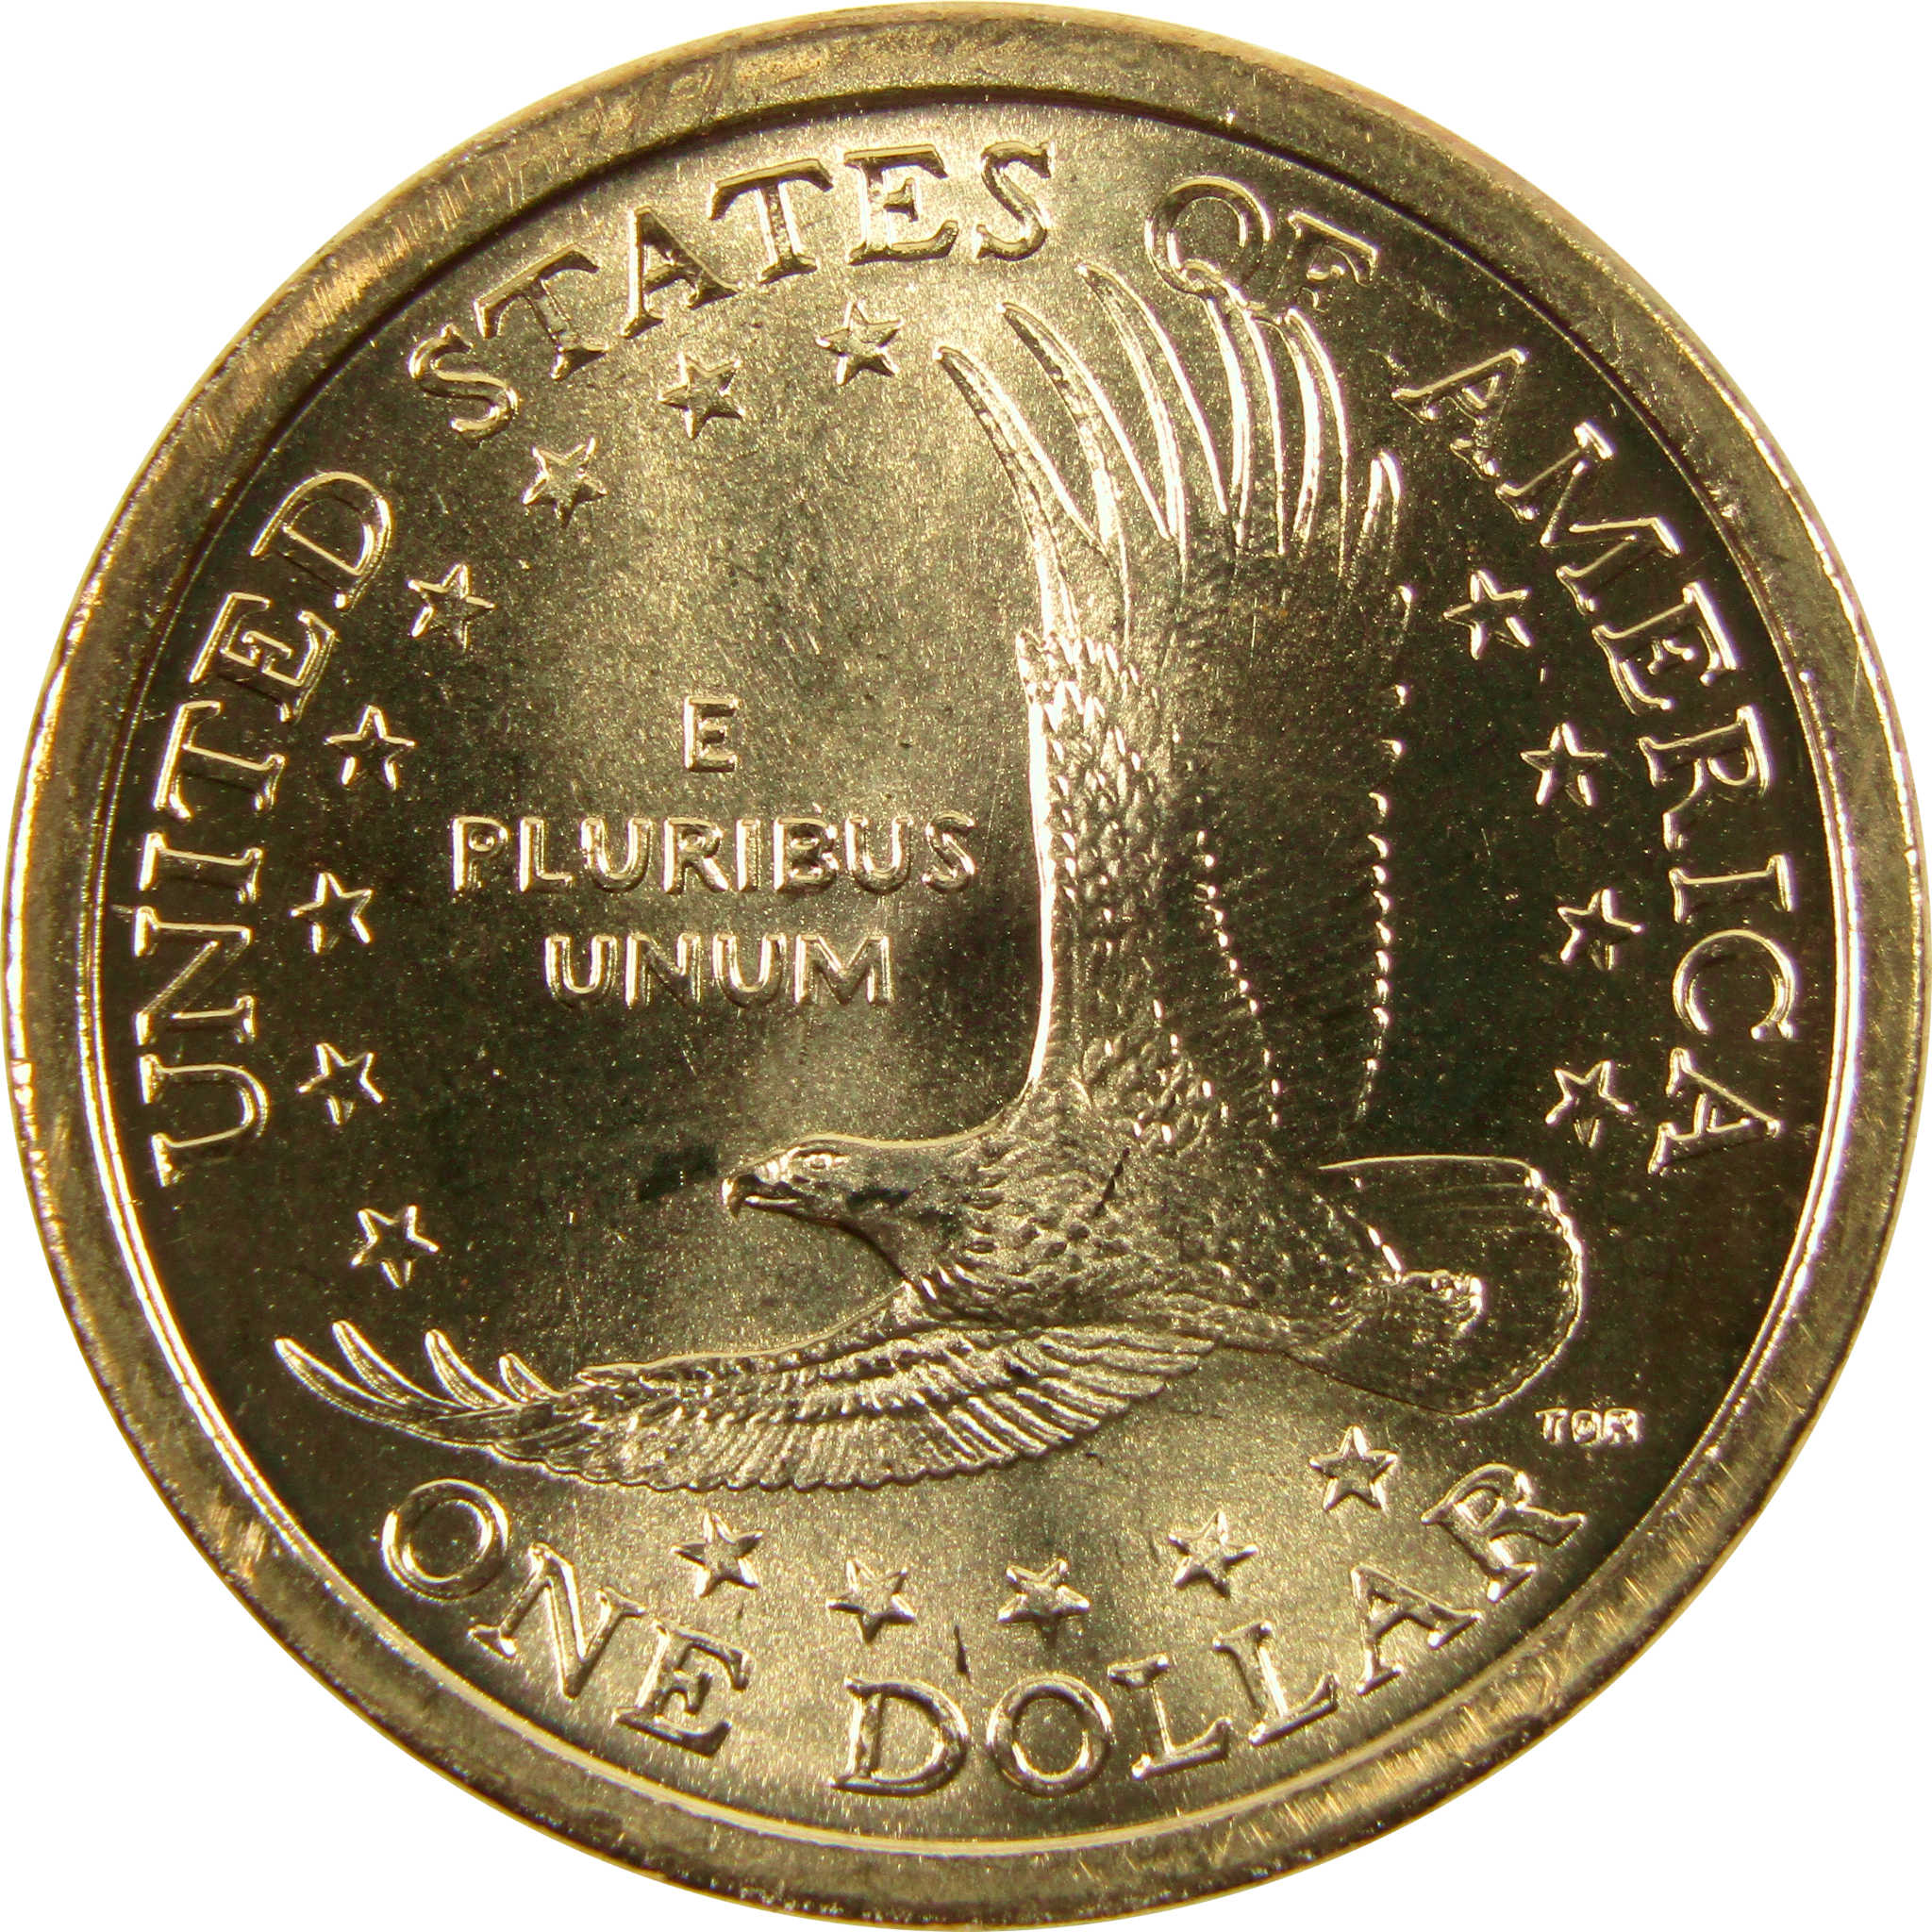 2000 P Sacagawea Native American Dollar BU Uncirculated $1 Coin